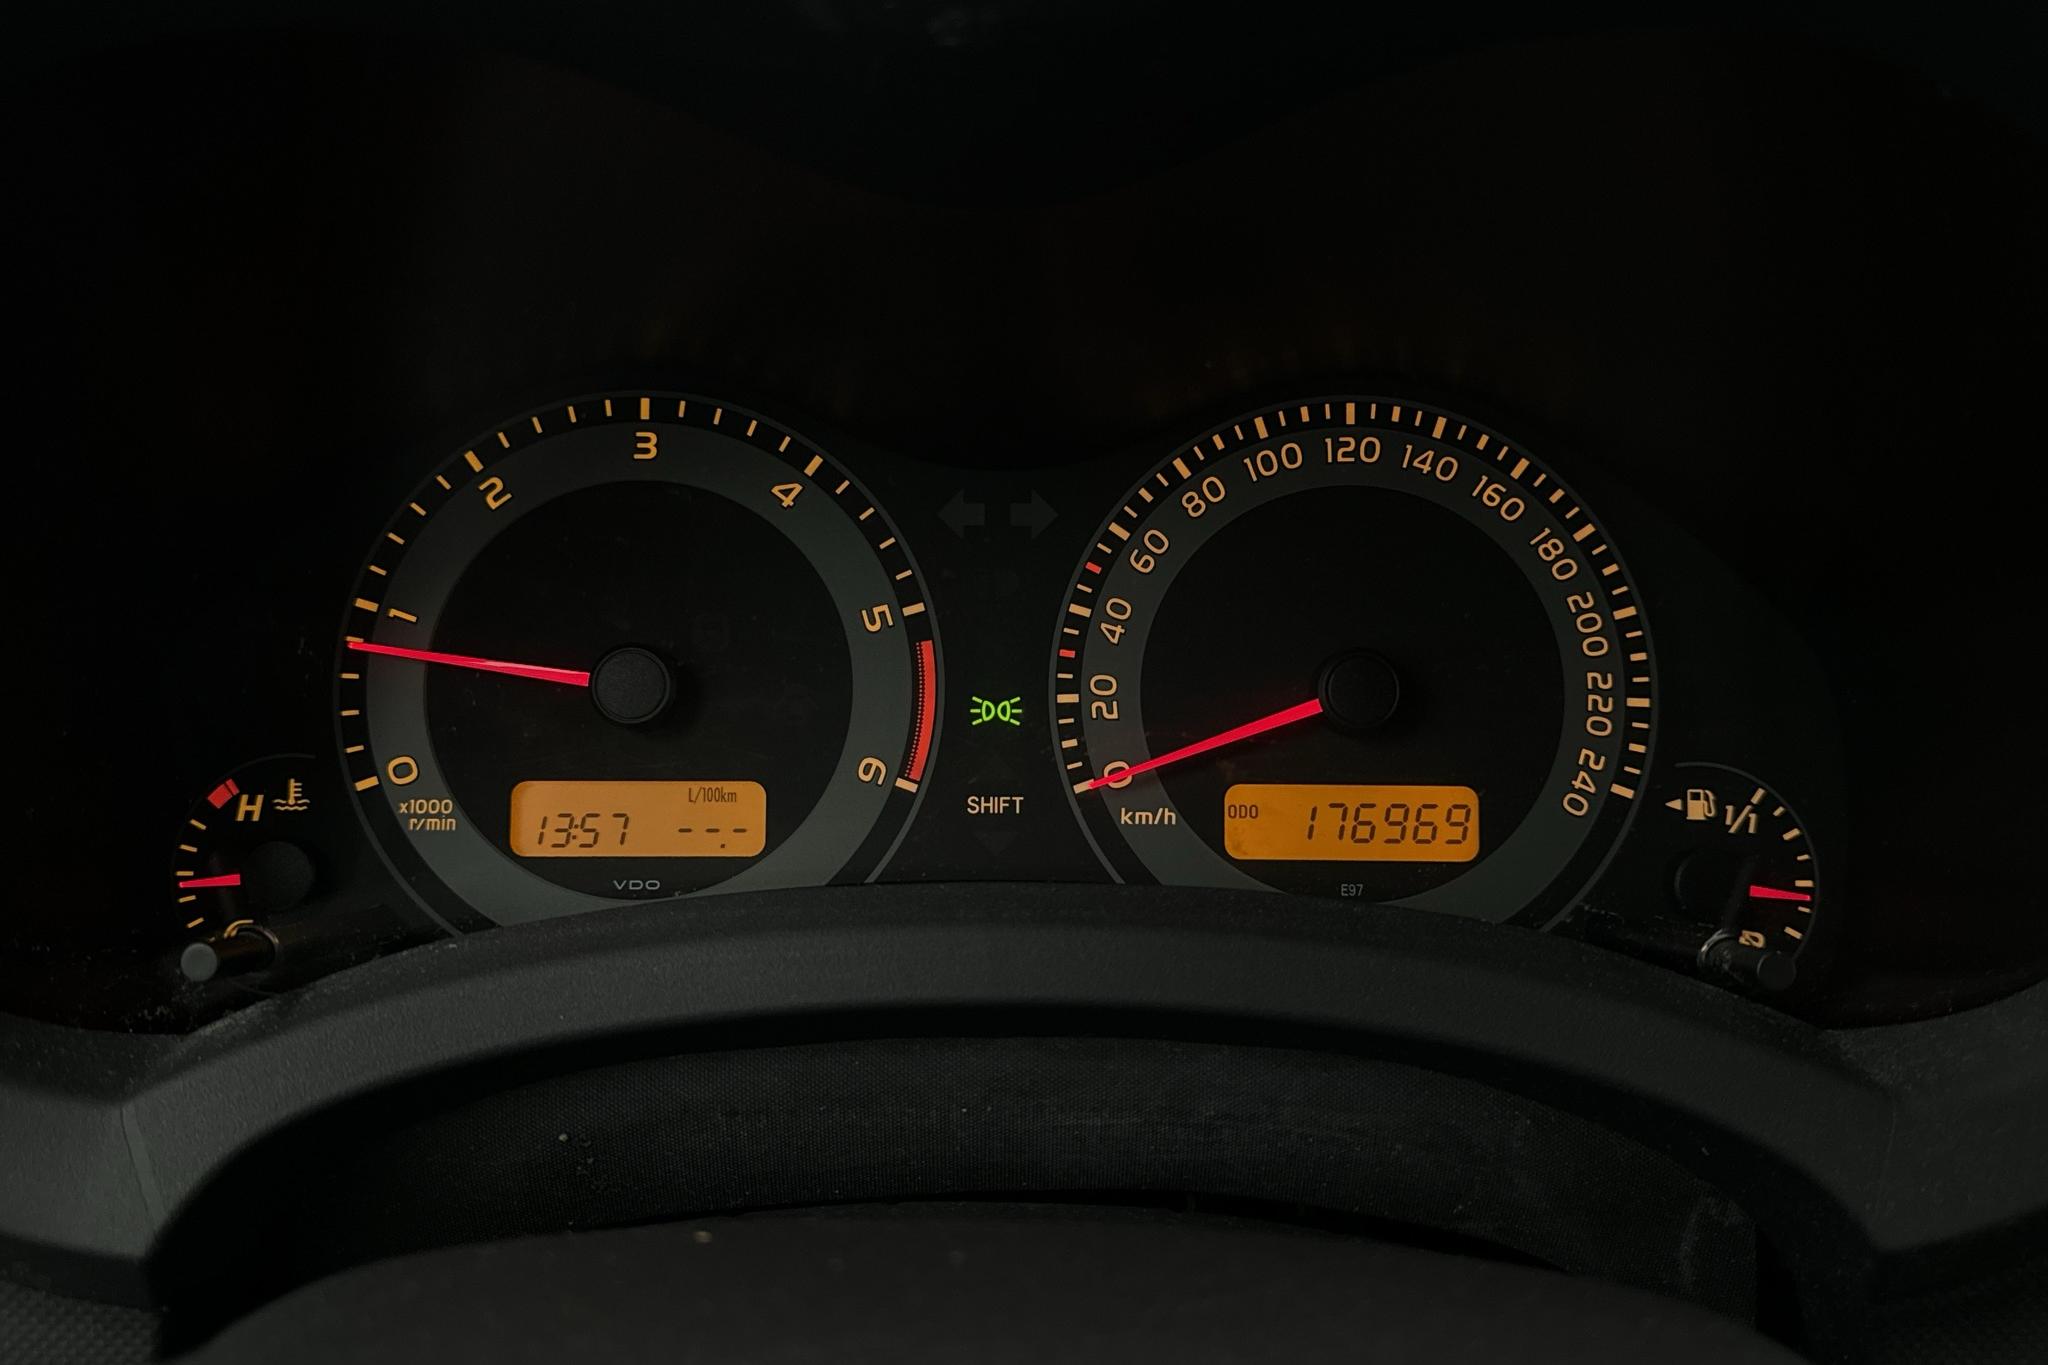 Toyota Auris 1.4 D-4D 5dr (90hk) - 176 970 km - Käsitsi - Dark Red - 2012